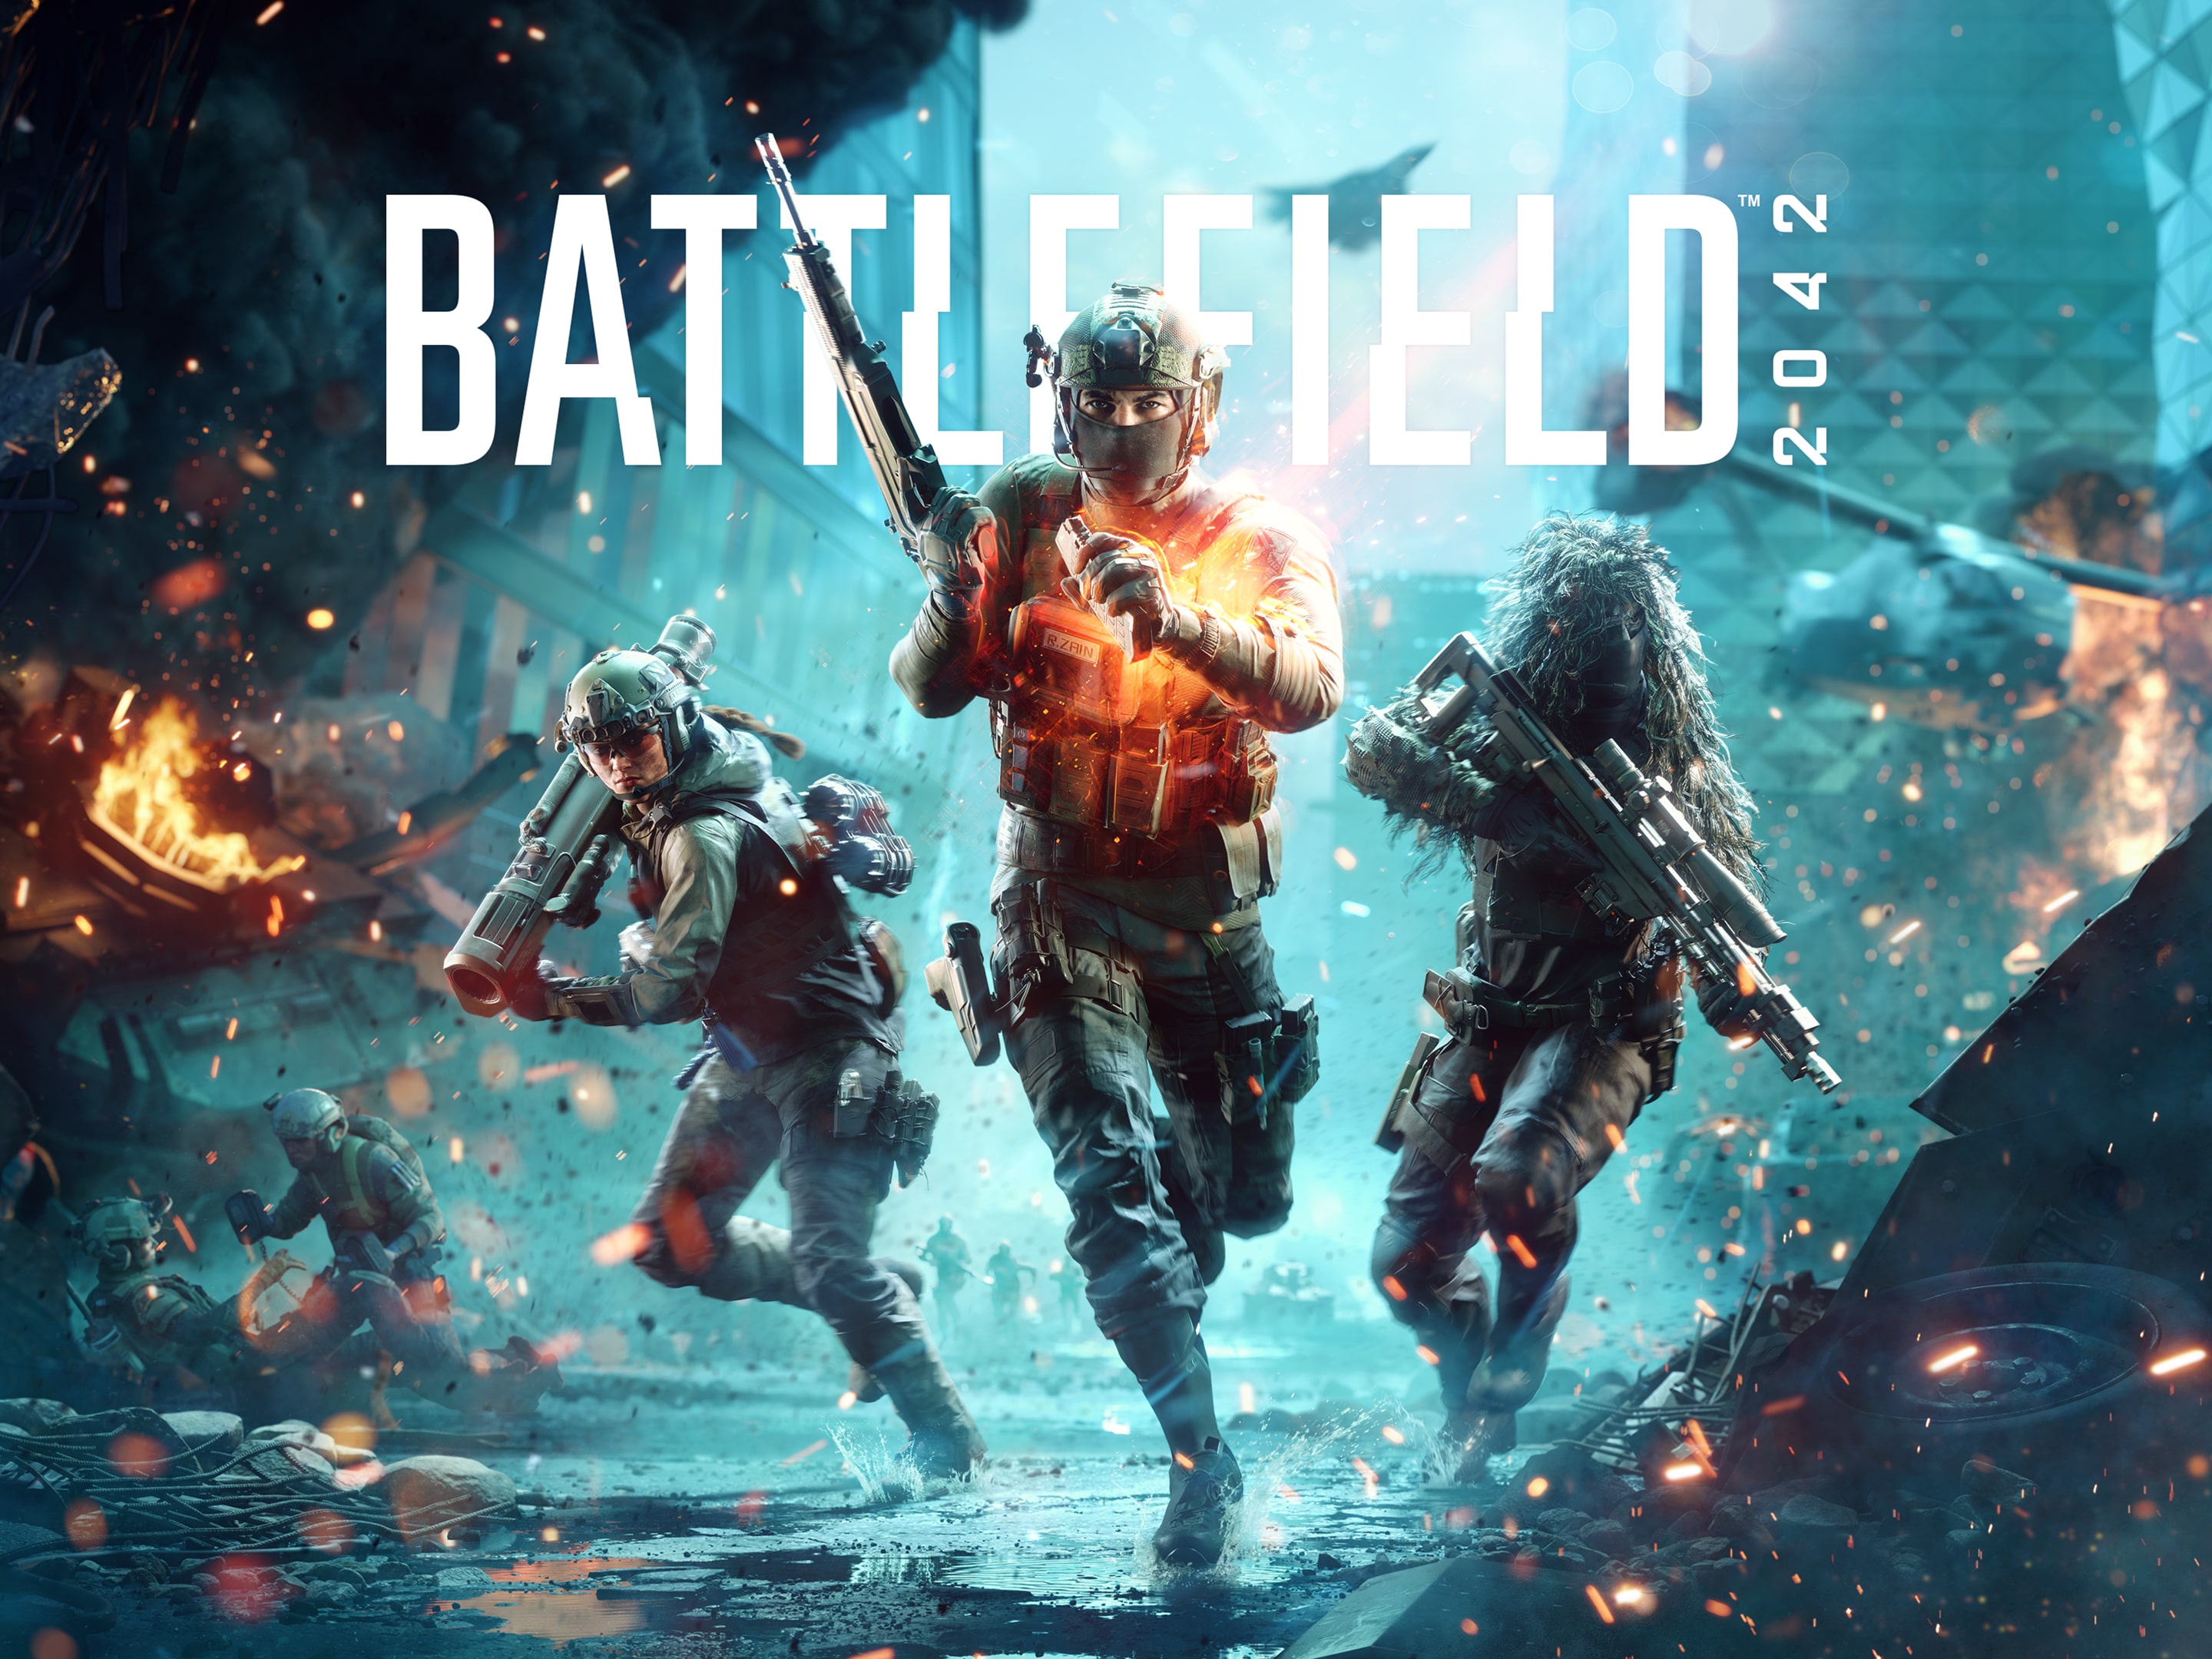 PlayStation4 -- Battlefield 4 Premium Edition -- PS4. JAPAN GAME